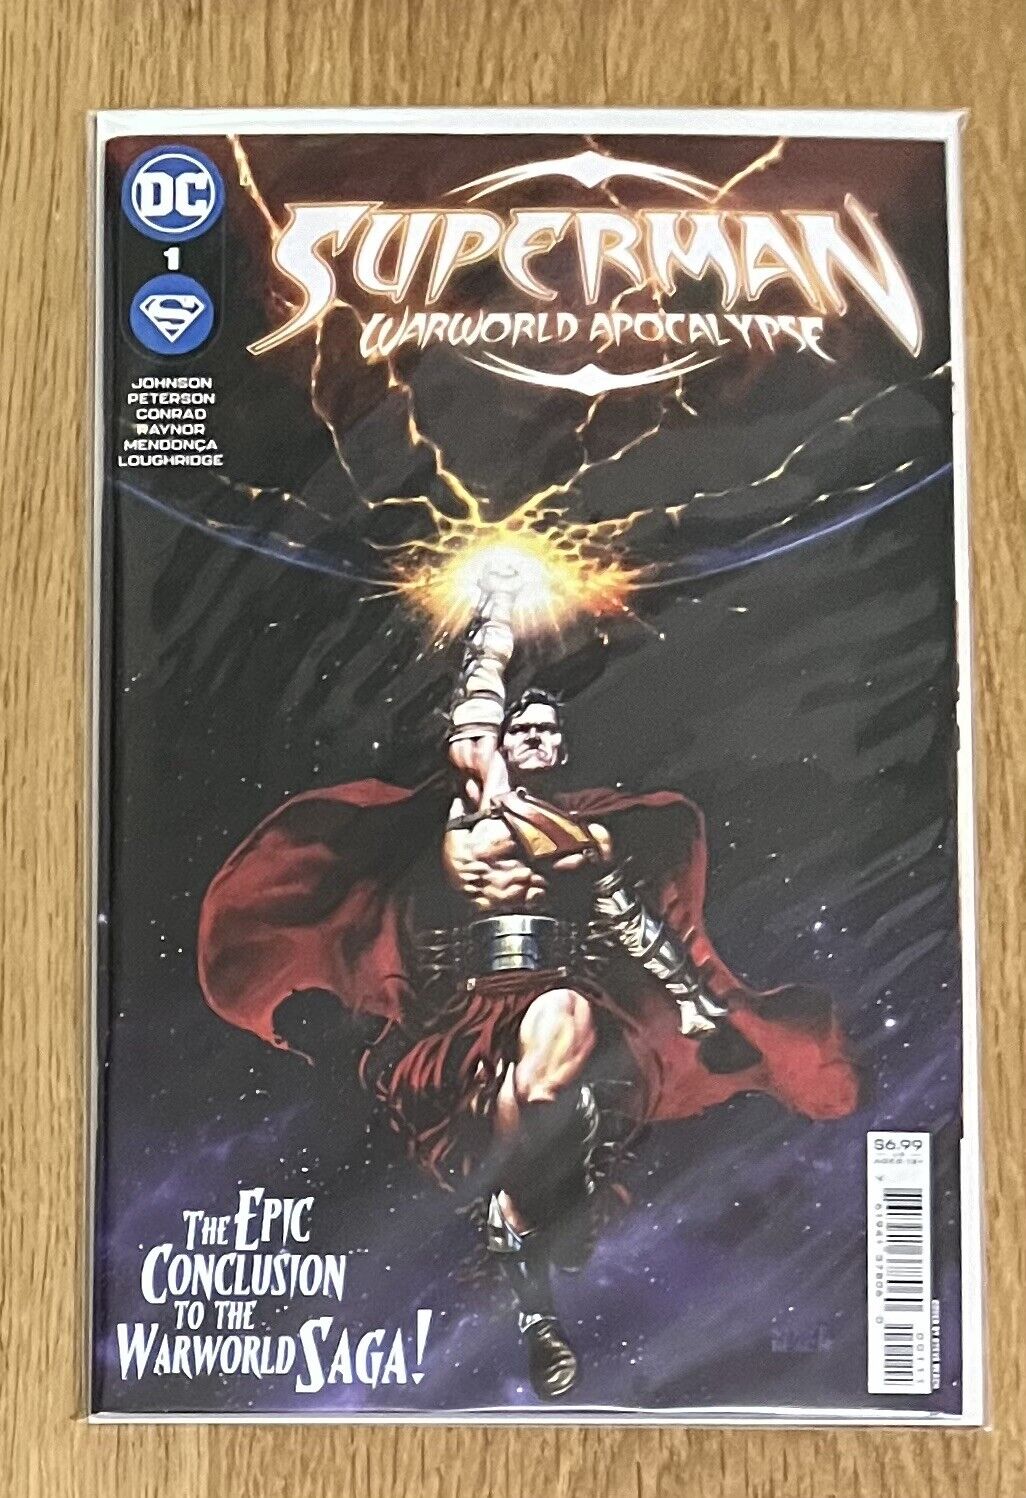 SUPERMAN WARWORLD APOCALYPSE #1 COVER A COMIC BOOK